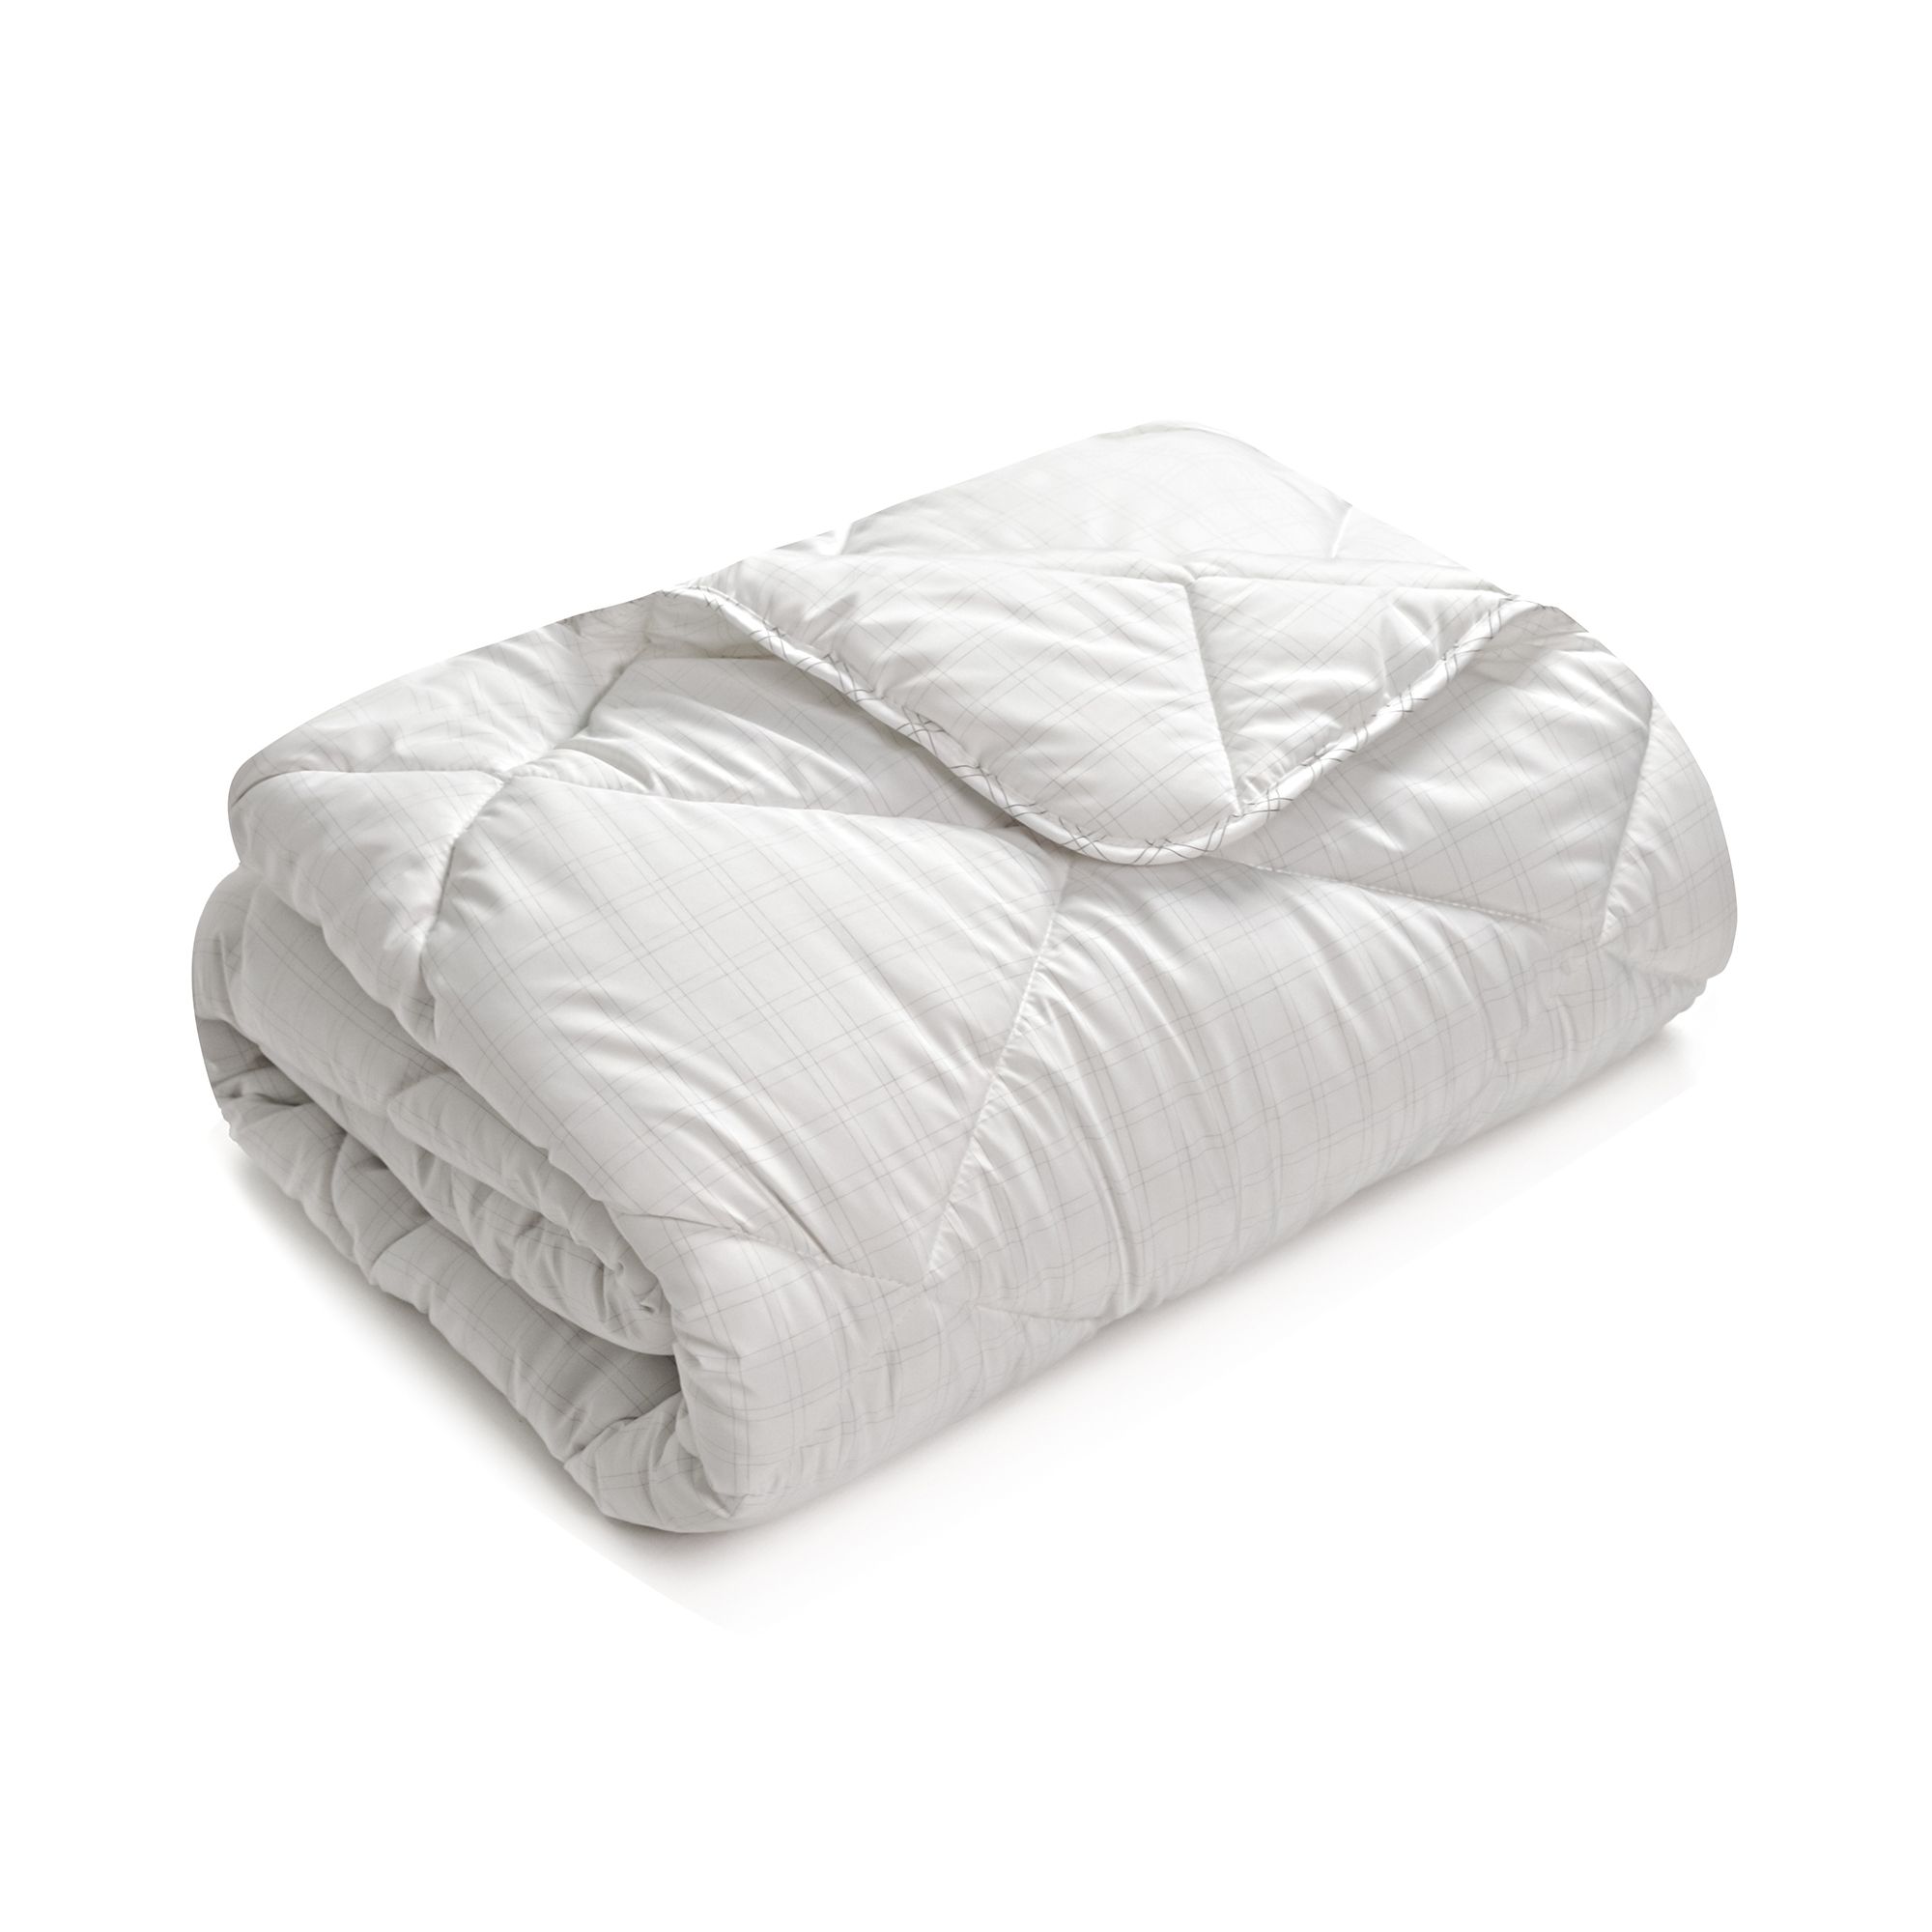 Капсула сна: одеяло Смарт 200x220 + подушки Антари 50x70, Компл.МД.00070